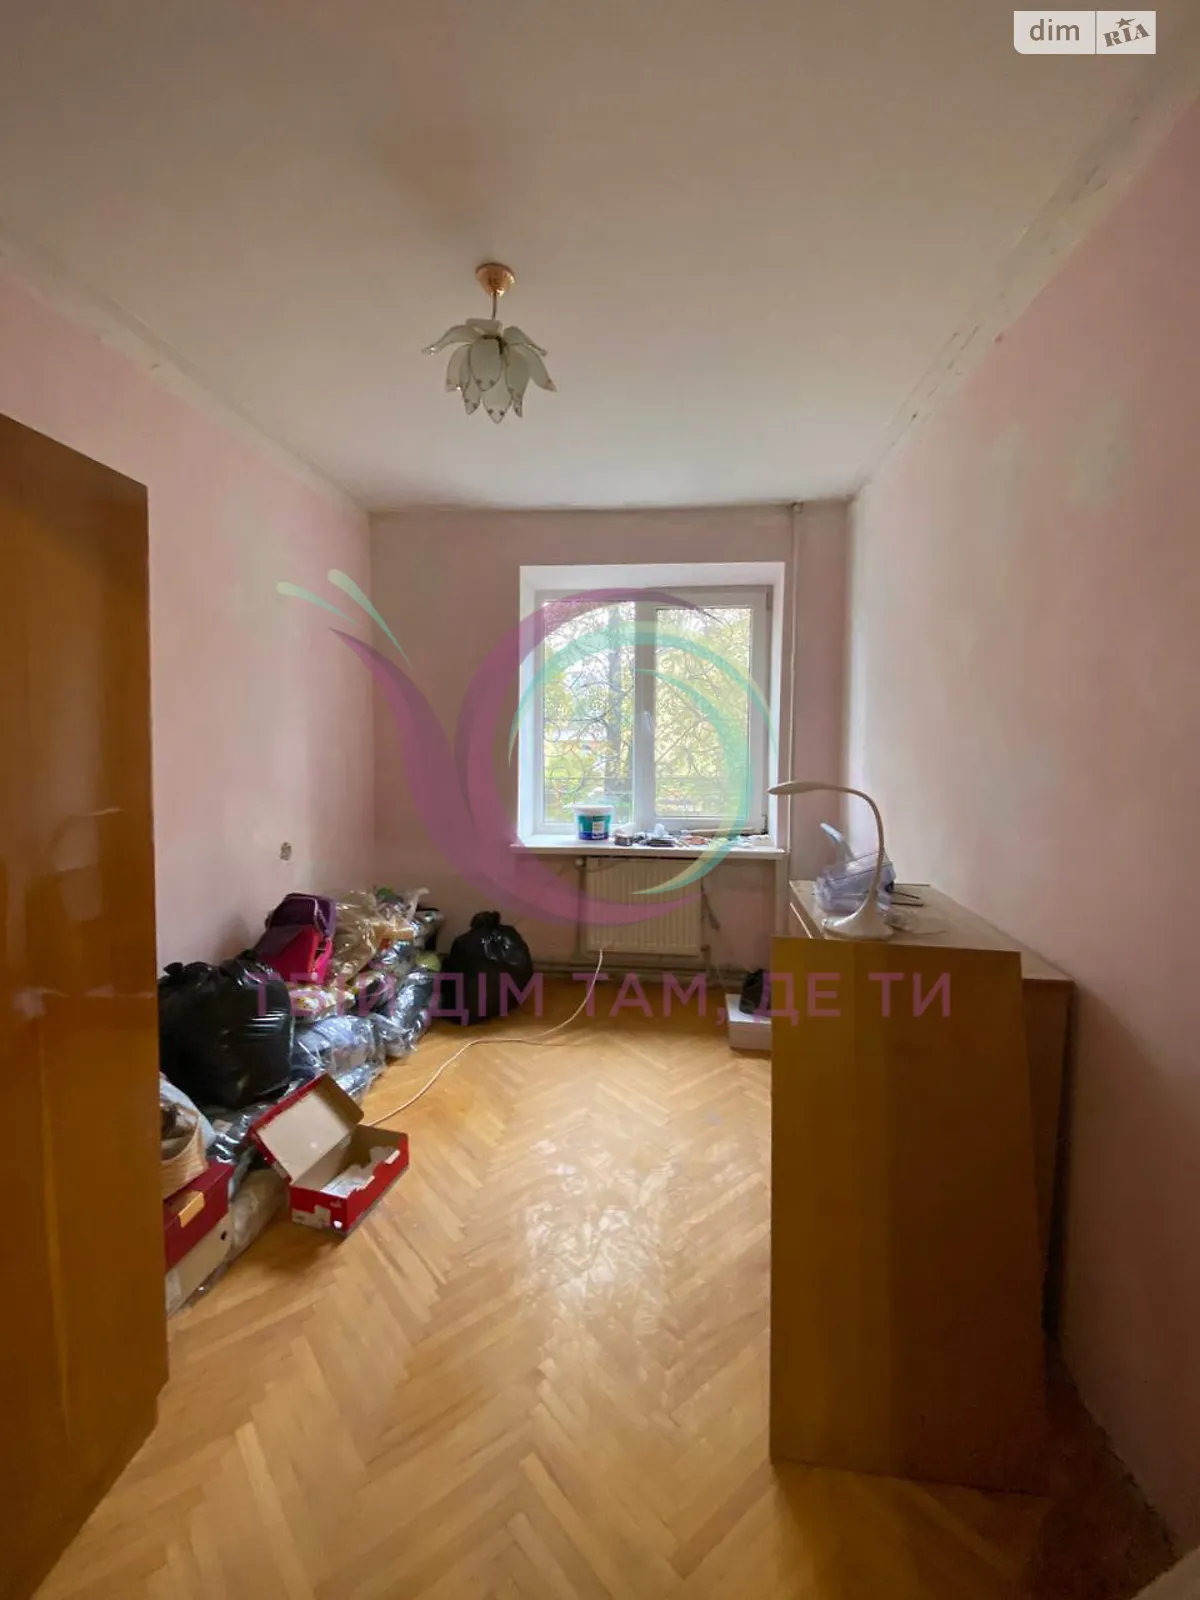 Сдается в аренду 2-комнатная квартира 60 кв. м в Ивано-Франковске - фото 3